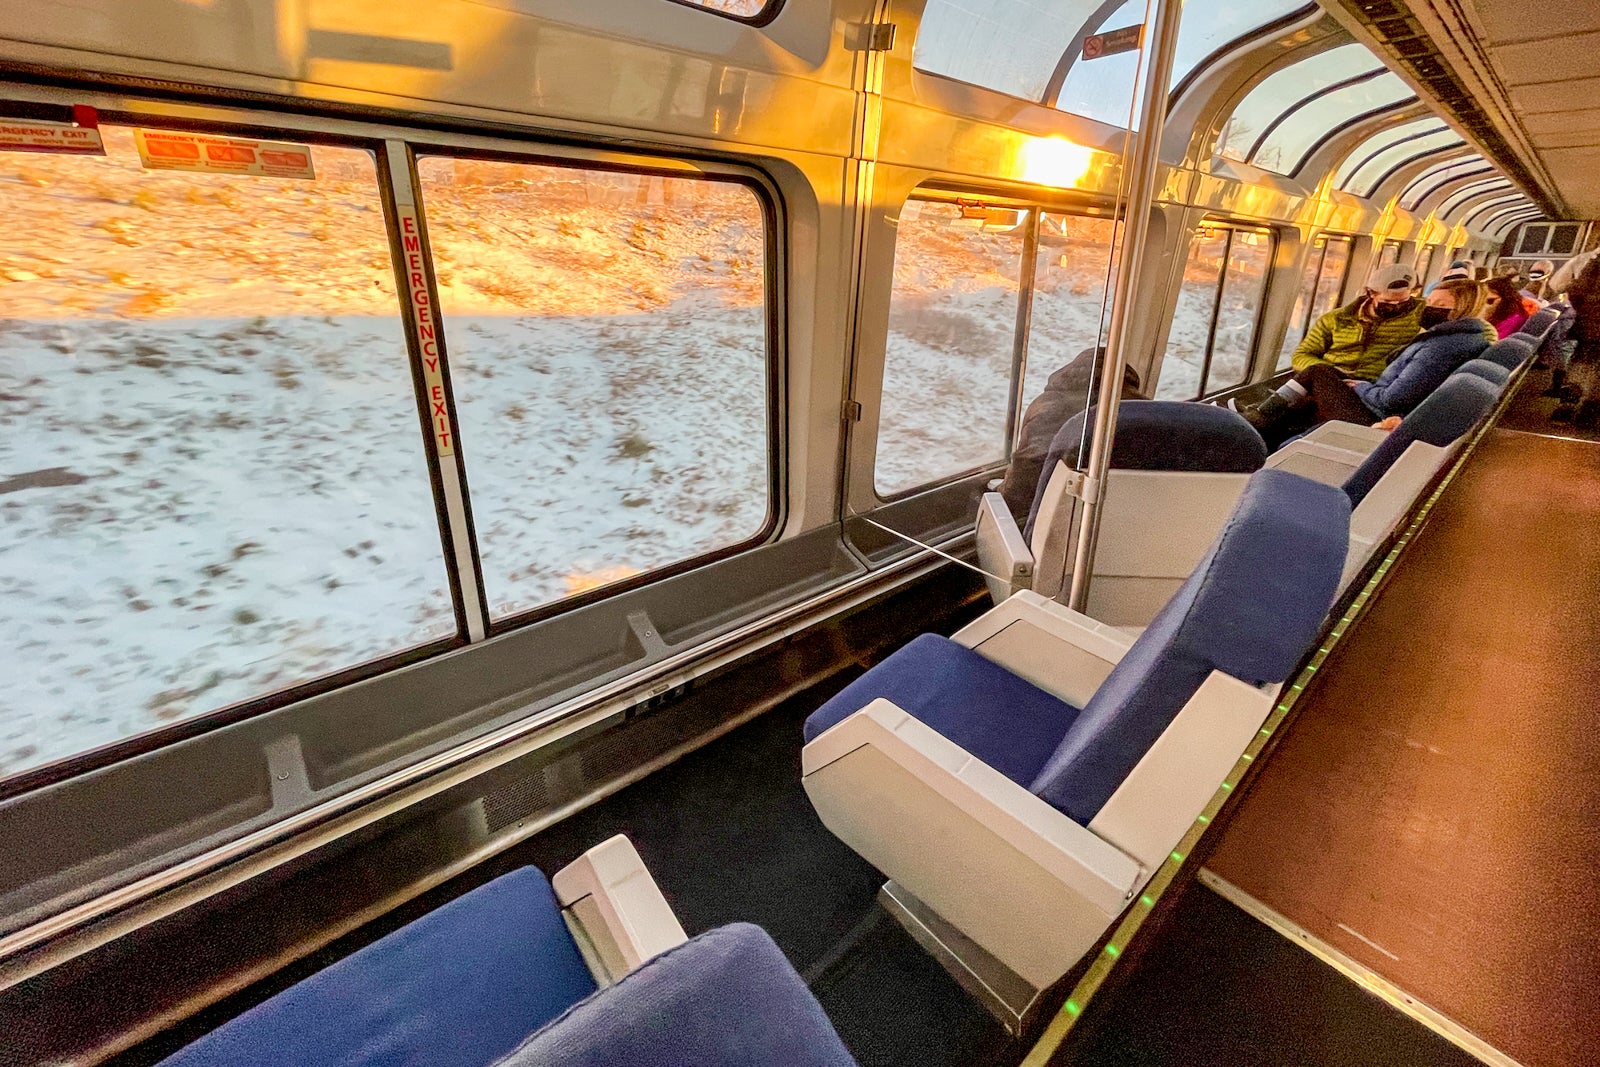 seats facing train window